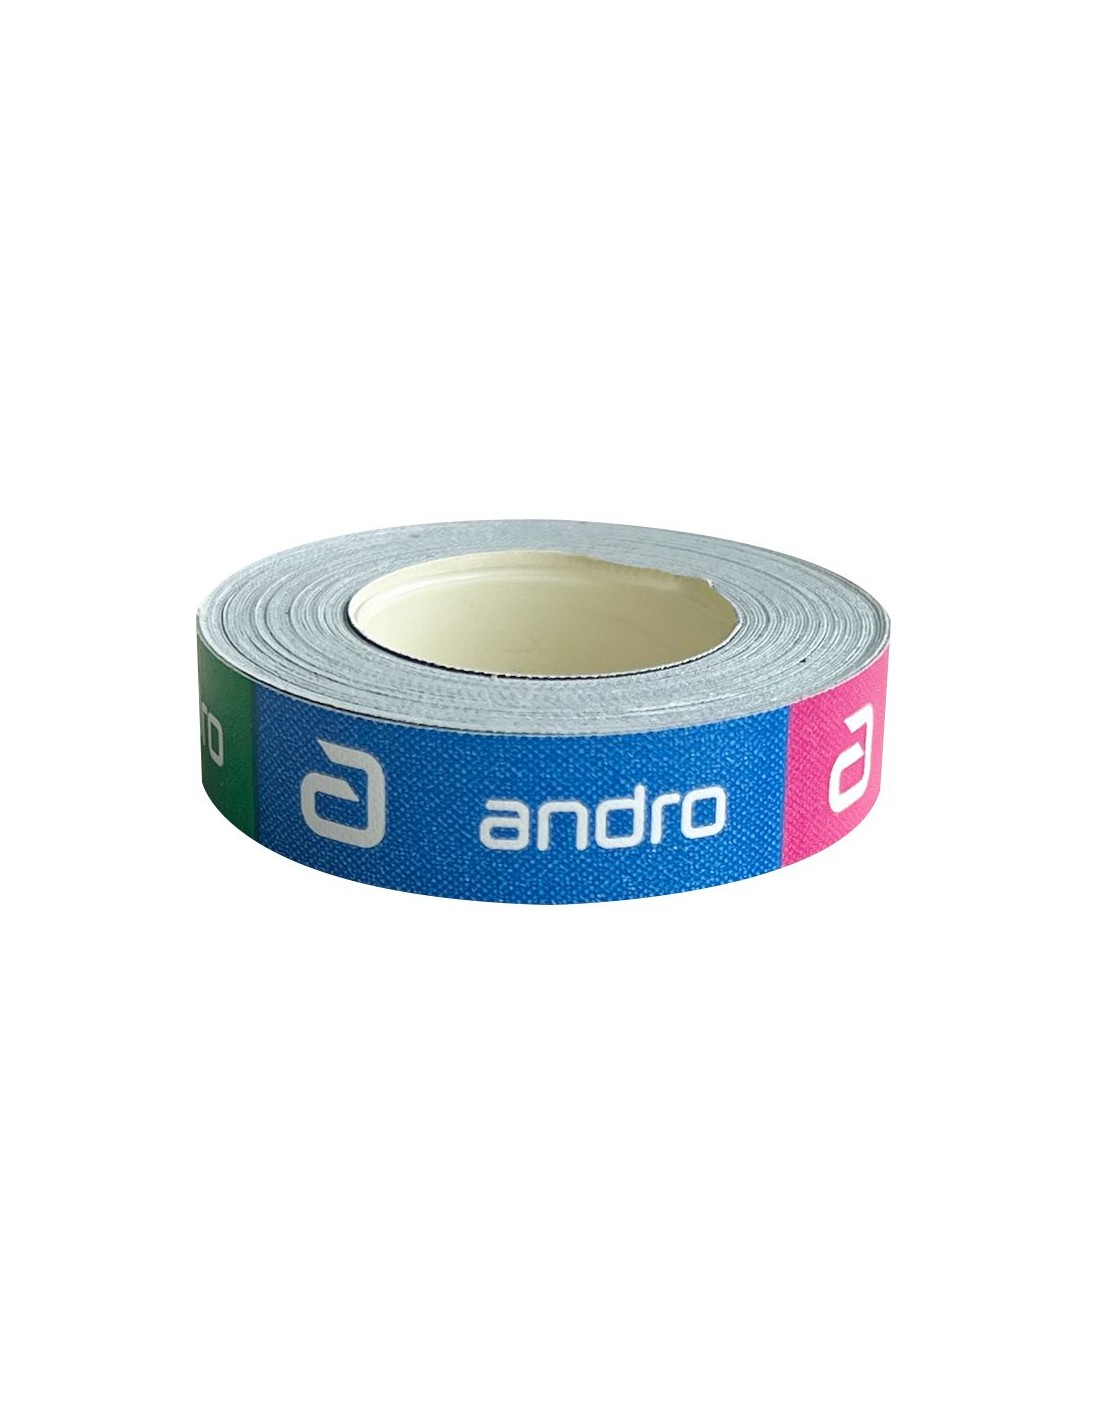 Bande de protection de tennis de table 12mm/5m Colors Andro